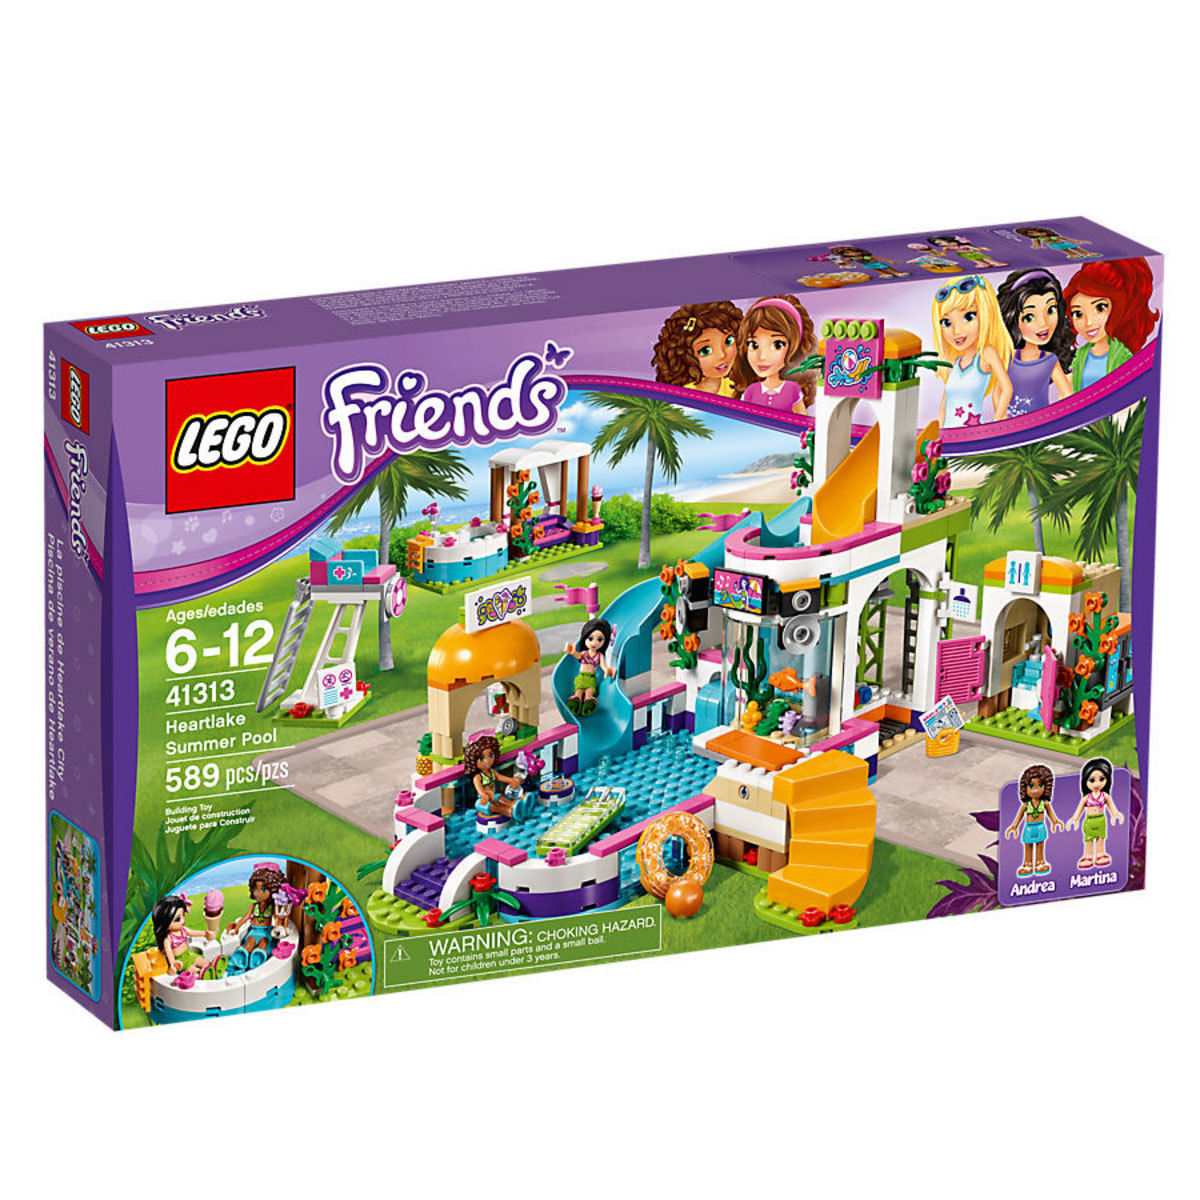 Lego Friends Heartland